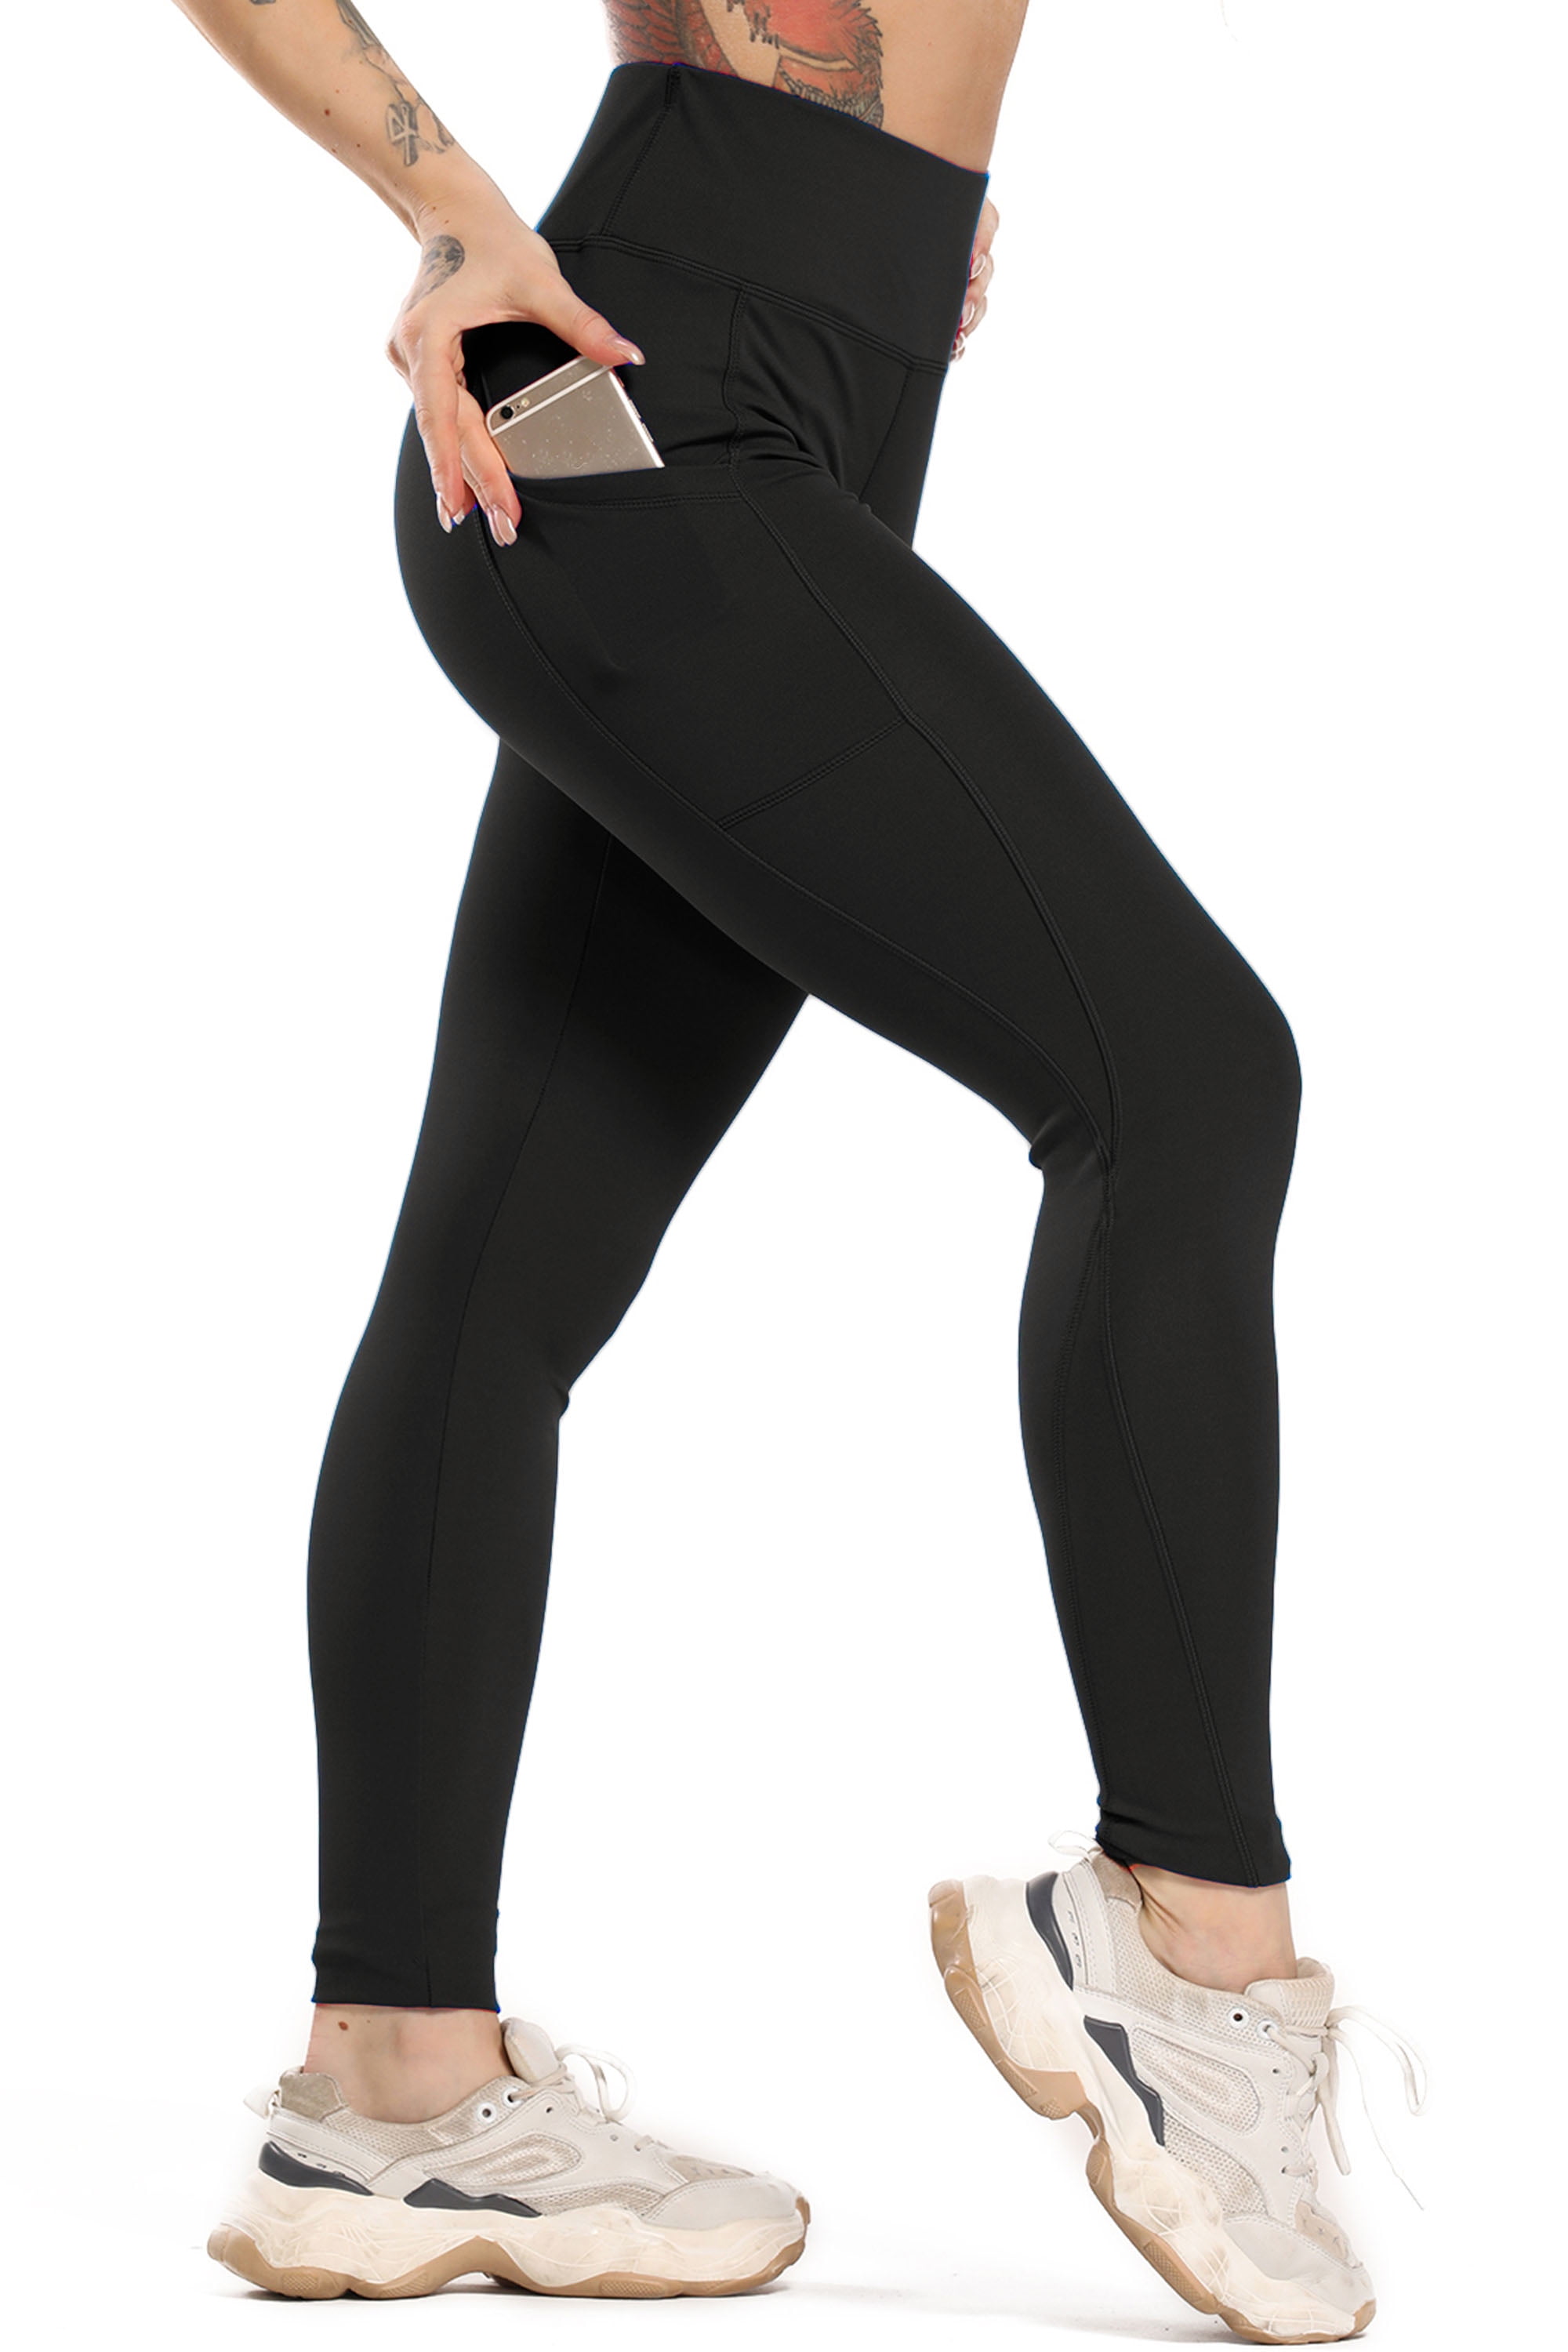 Zero Zoo High Waist Yoga Pants for Women with Pockets Tummy Control Workout Pants 4 Way Stretch Yoga Leggings 